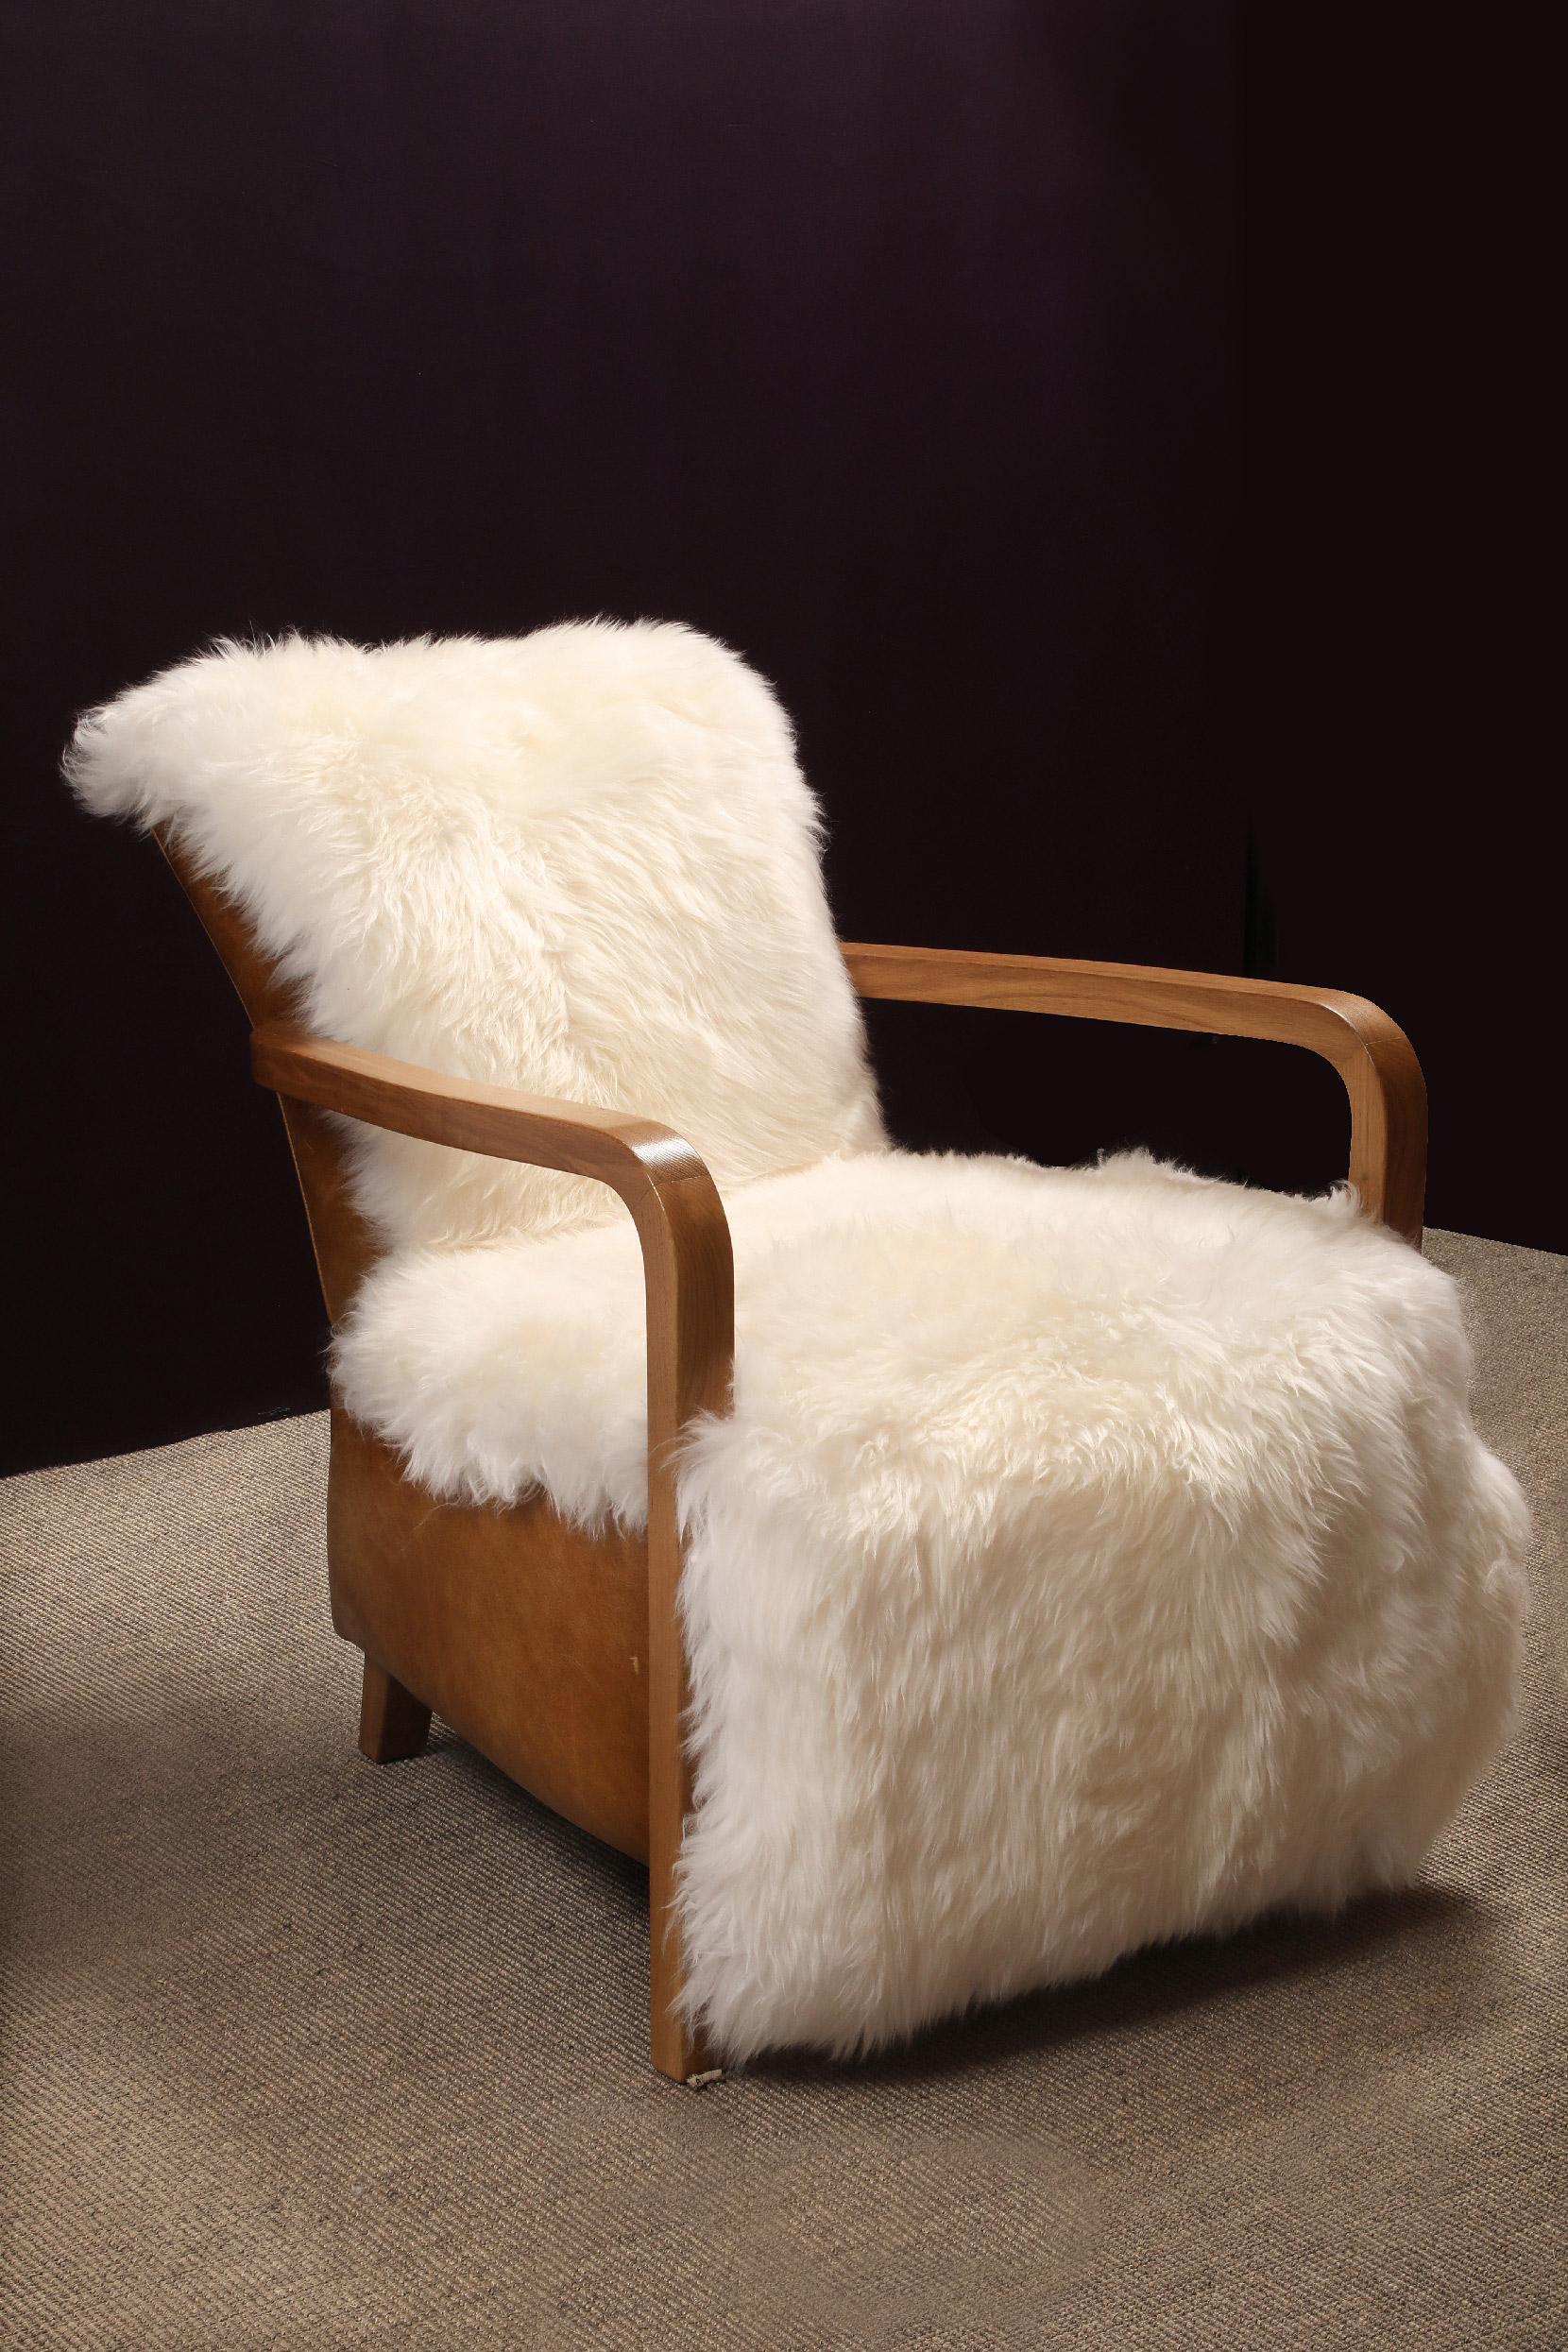 Baa Baa armchair from Top Secret Furniture